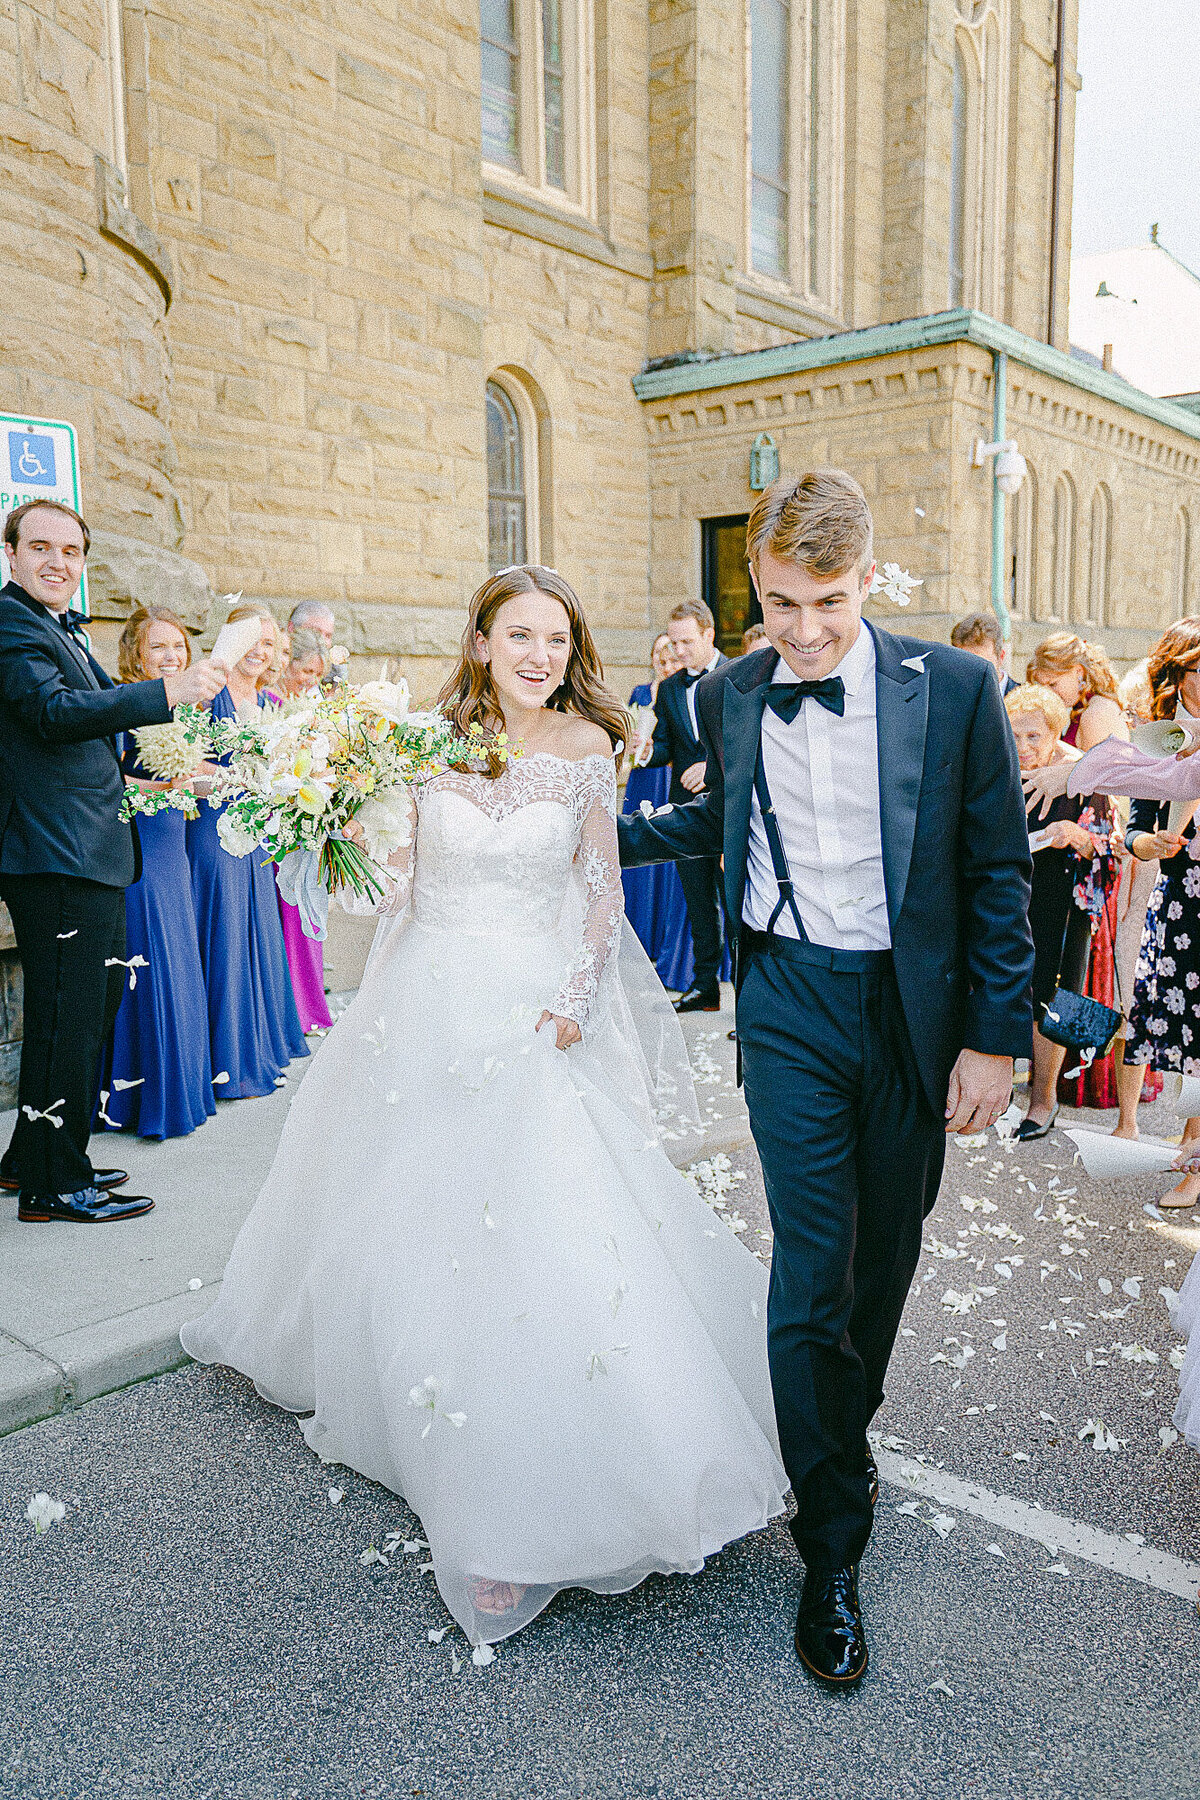 Bride and Groom make a rose petal getaway at their intimate wedding ceremony